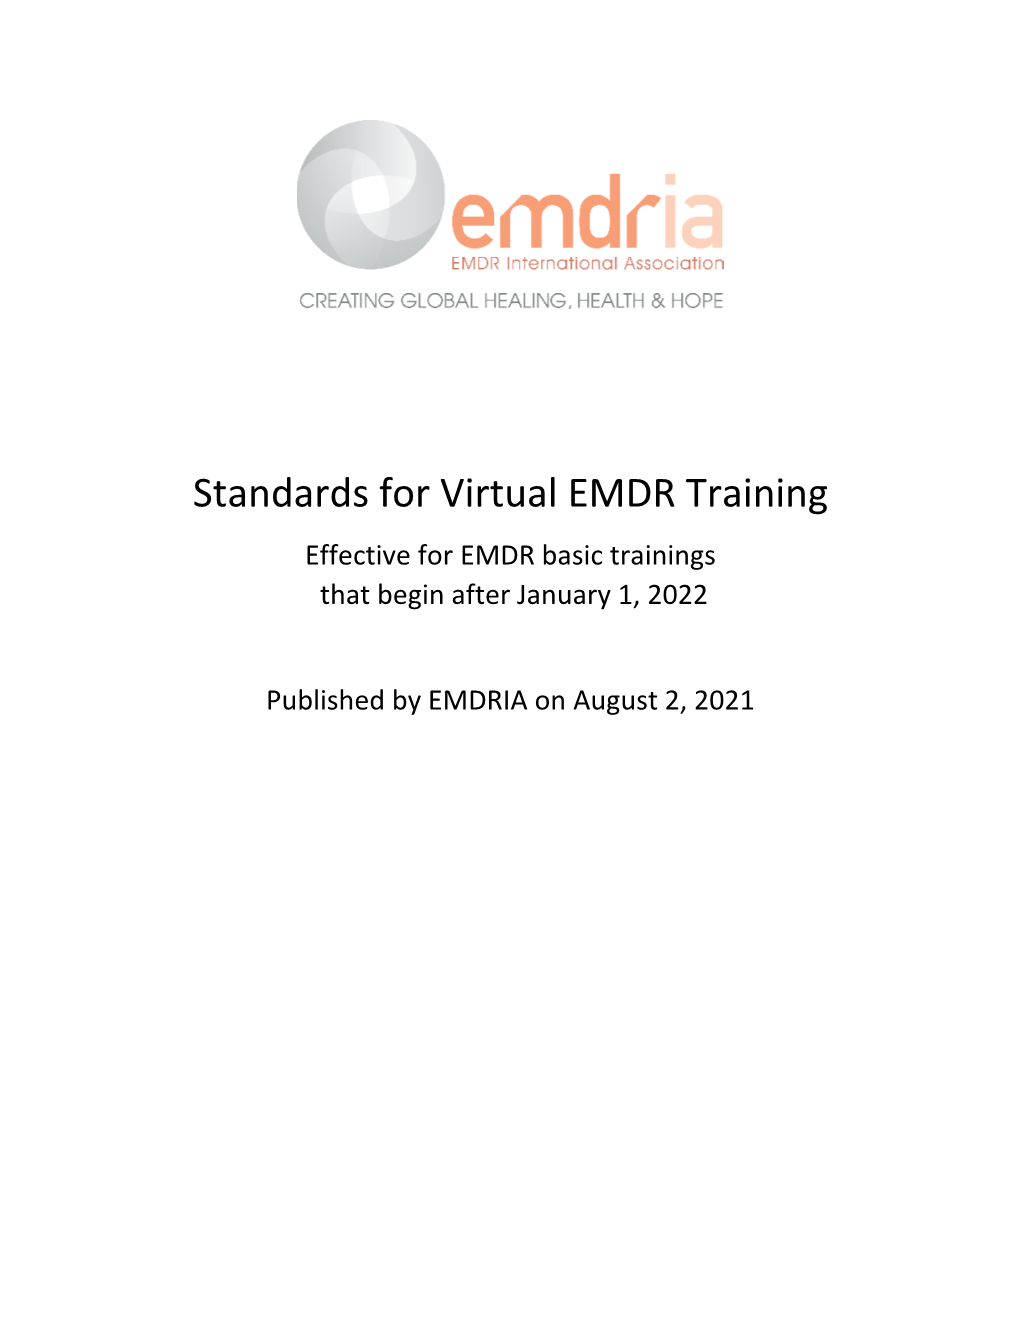 Standards for Virtual EMDR Training Effective for EMDR Basic Trainings That Begin After January 1, 2022